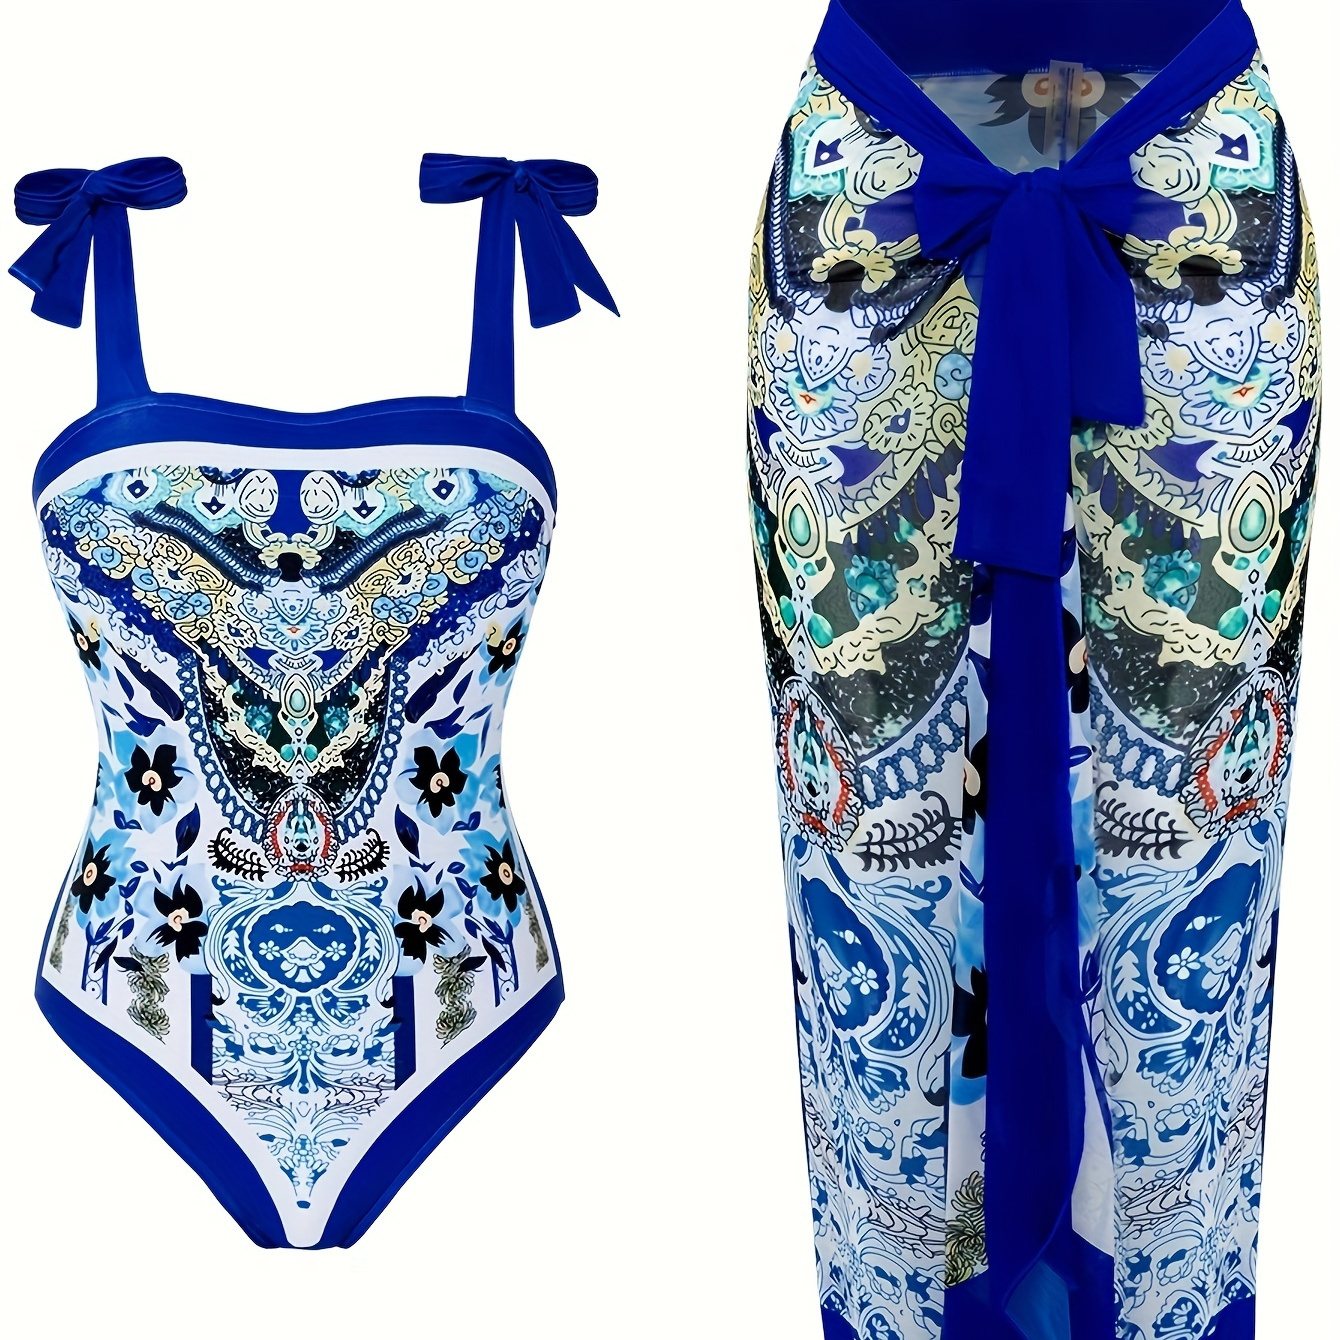 

Elegant Blue Floral Print Stretchy 2 Piece Swimsuits, Tie Shoulder Vintage One-piece Bathing-suit & Contrast Trim Maxi Cover Up Skirt, Women's Swimwear & Clothing